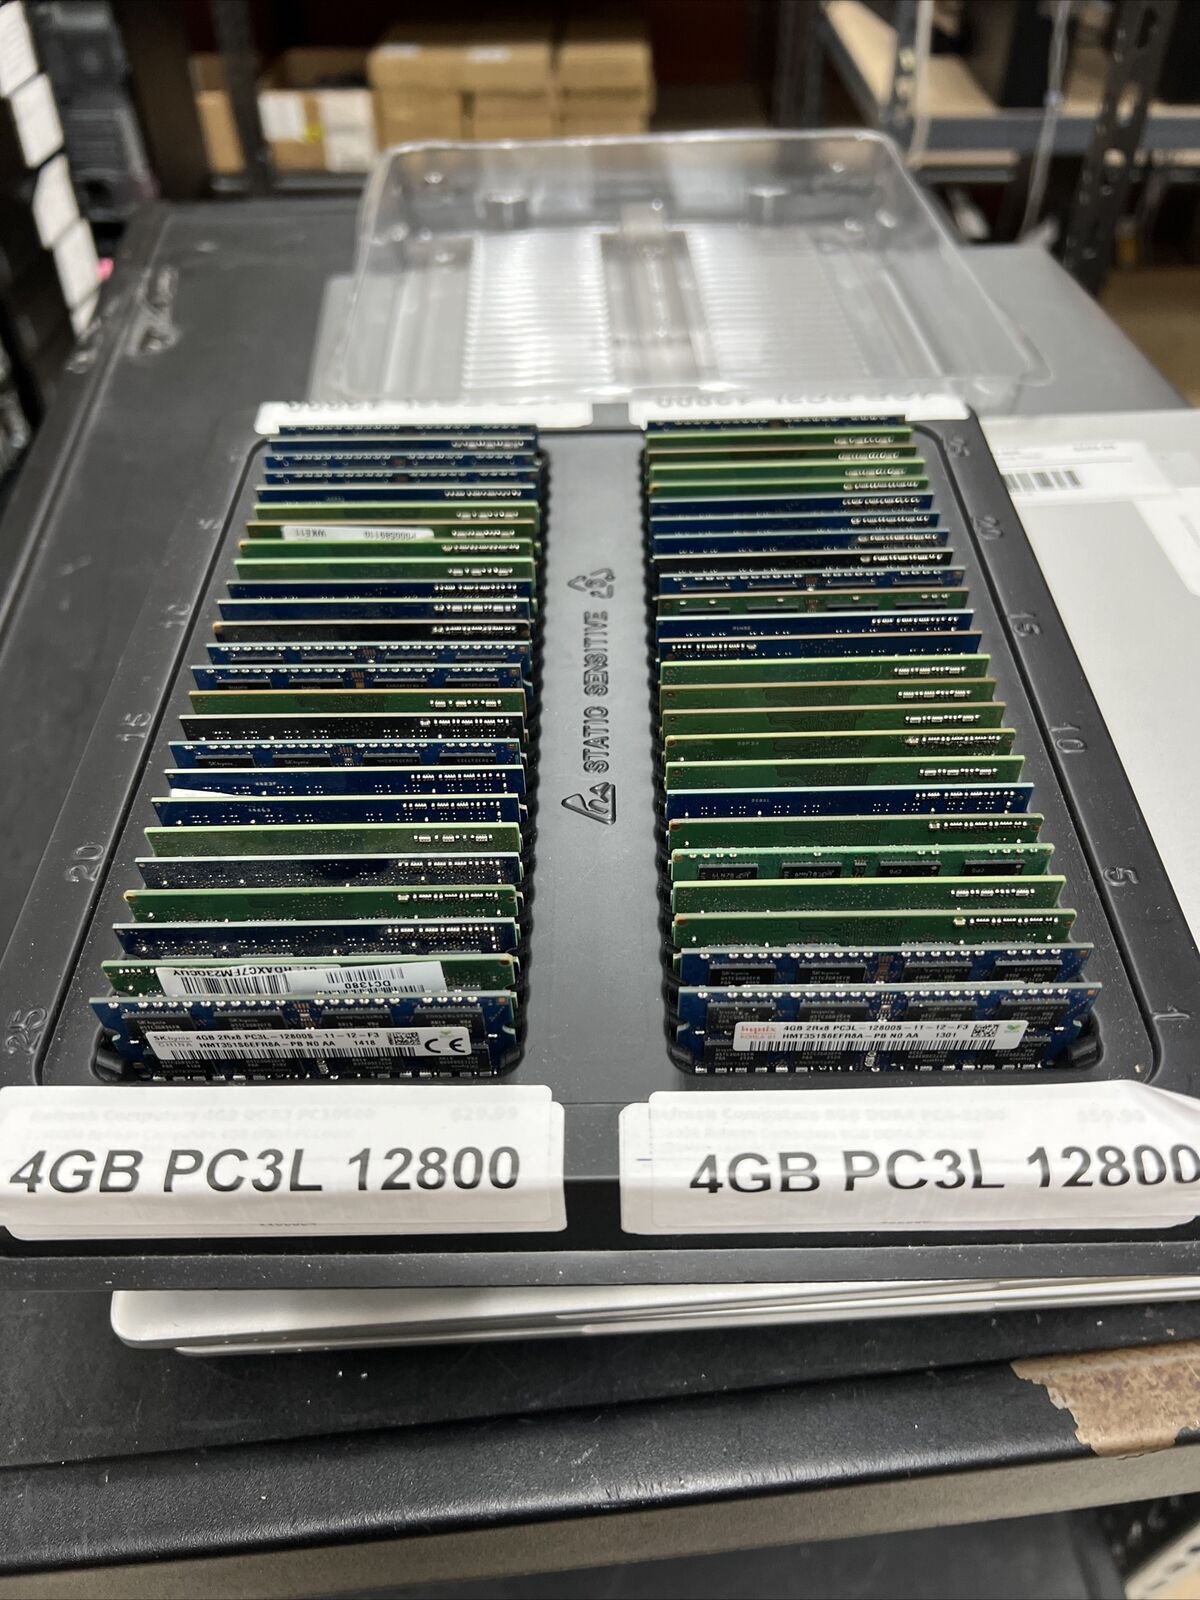 Lot of 50 4GB PC3L-12800 DDR3L Laptop Ram Sticks Mixed Manufacturer